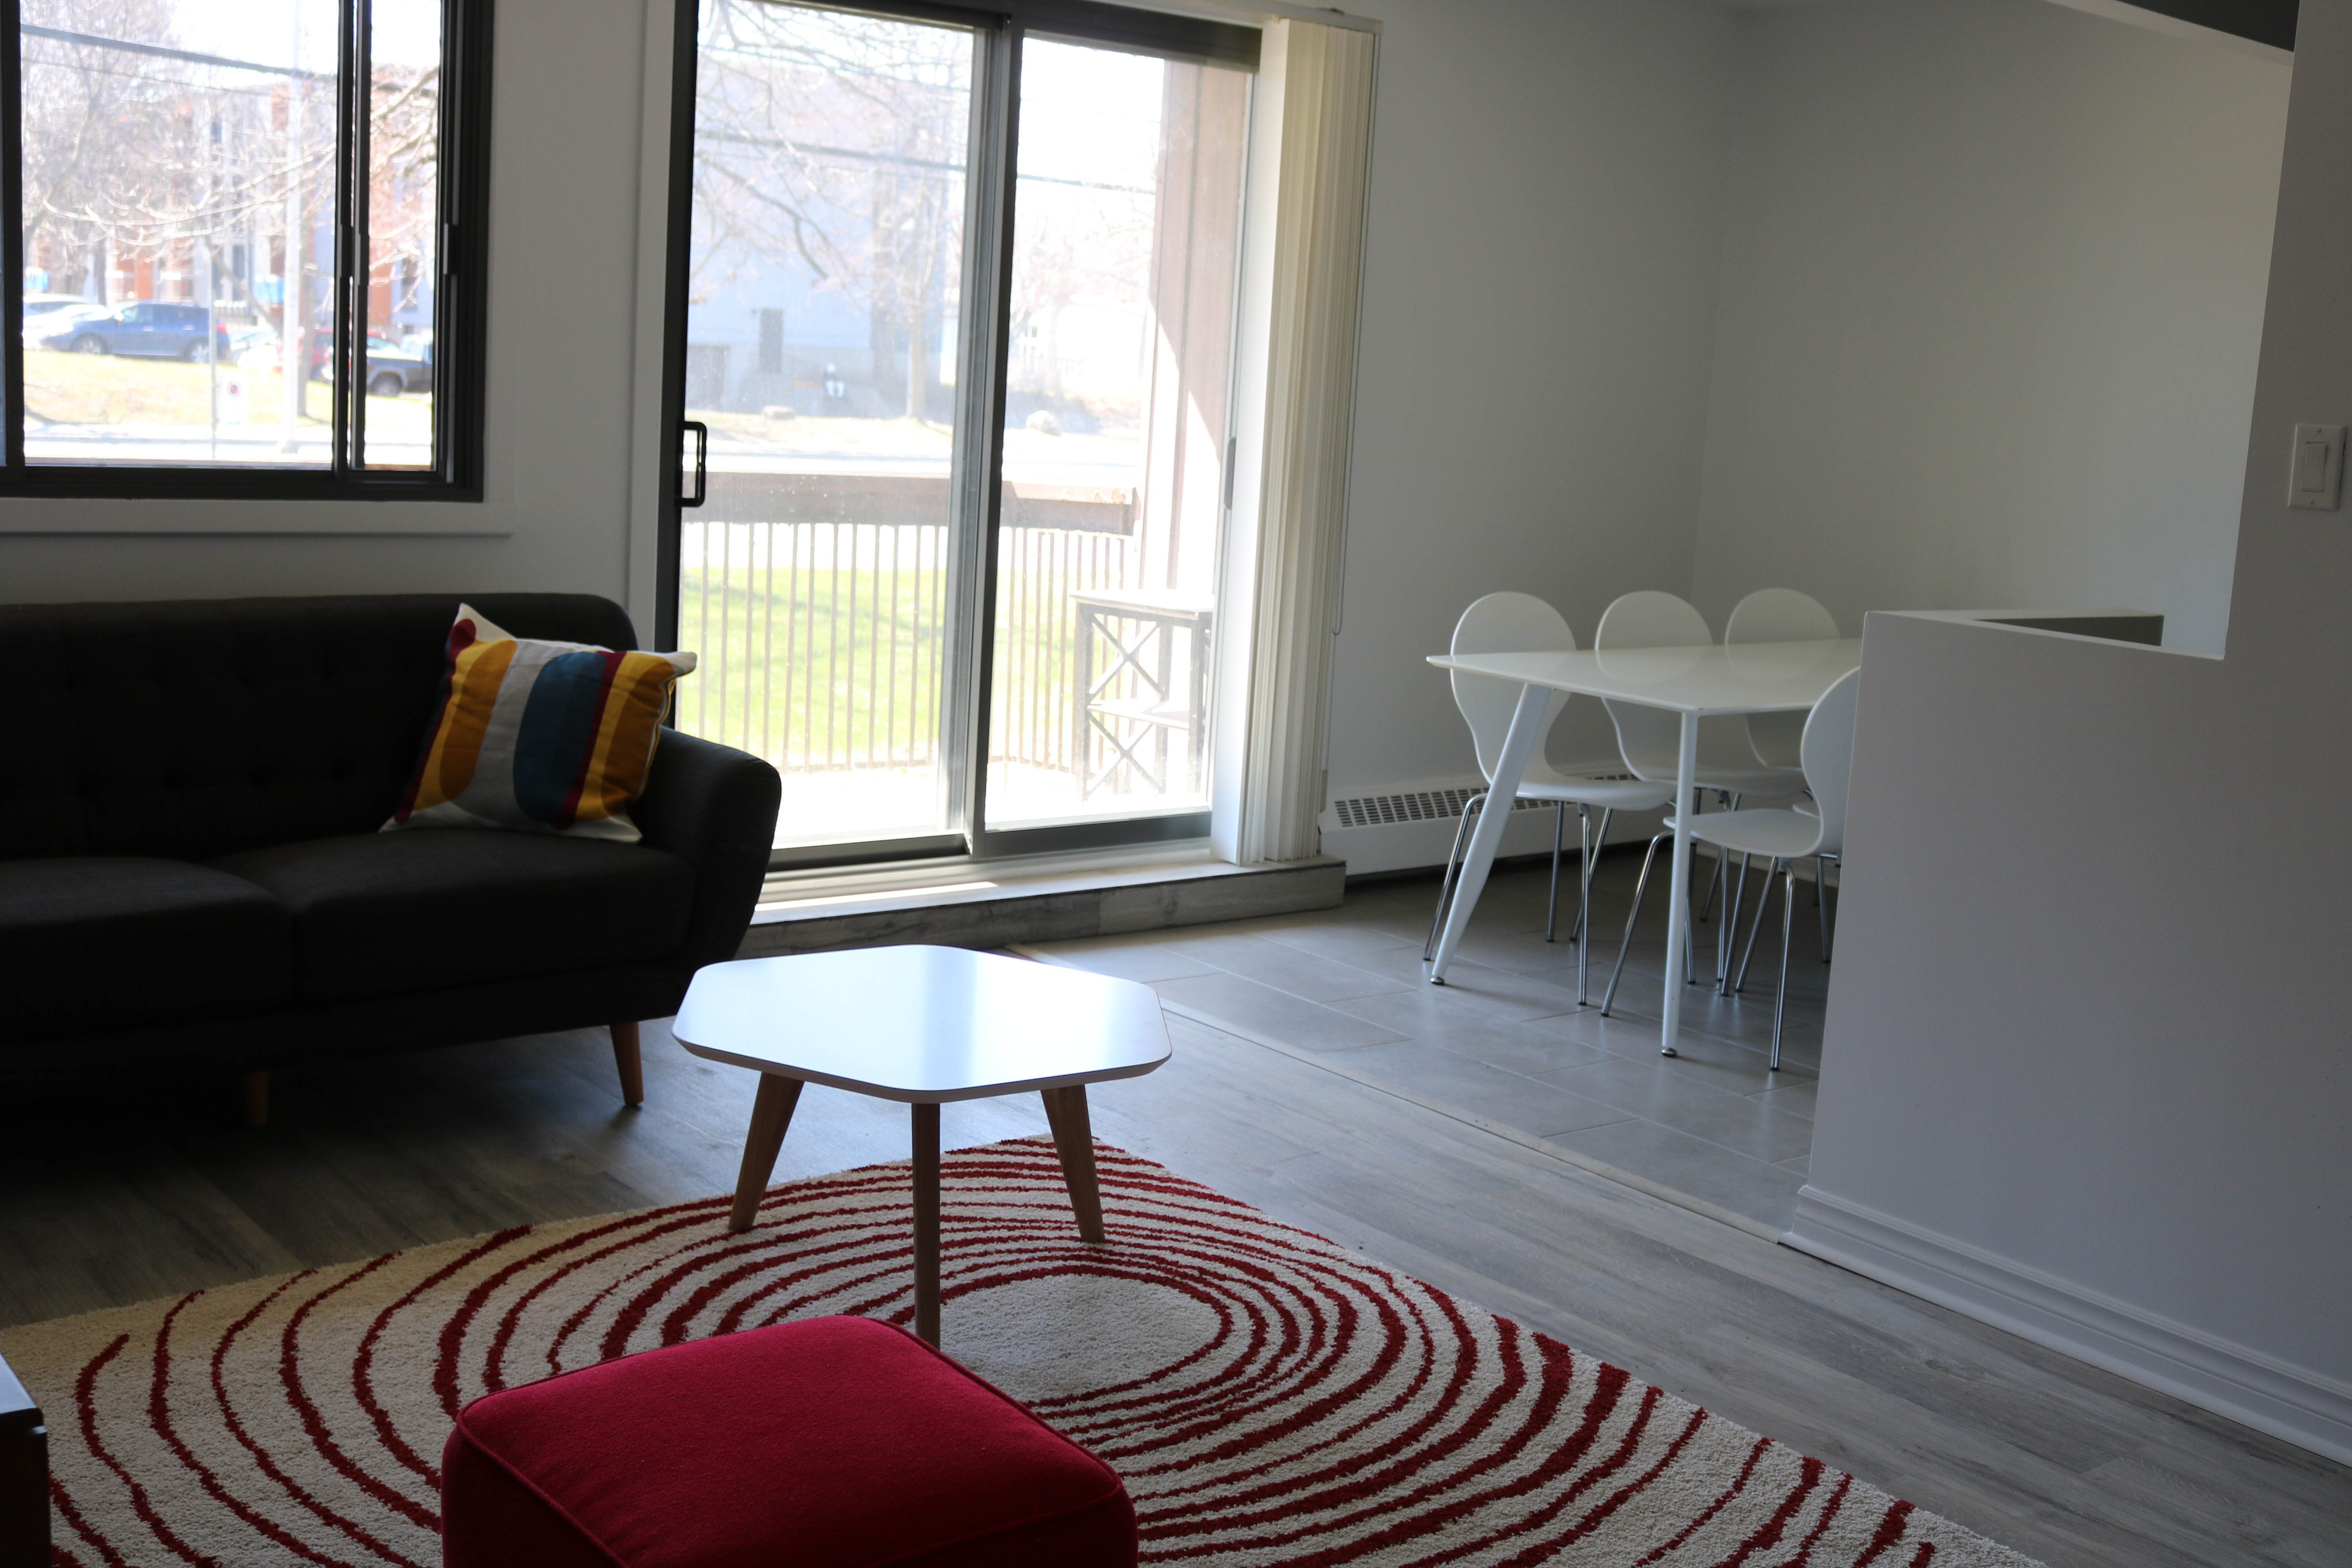 1 bedroom Apartments for rent in Dollard-des-Ormeaux at Place Fairview - Photo 01 - RentQuebecApartments – L404486